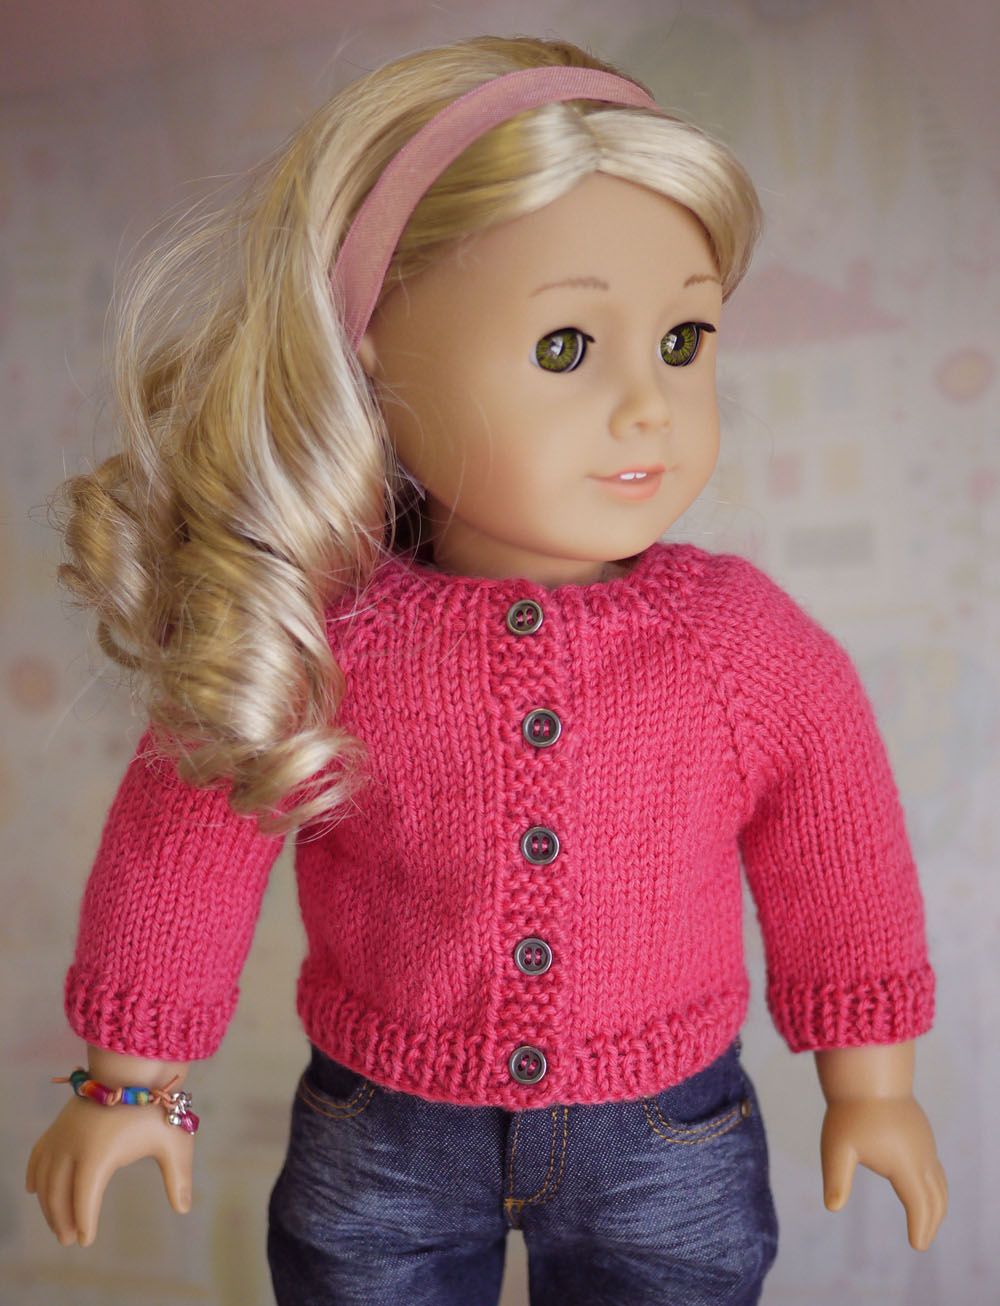 American Girl Doll Cardigan Sweater Knitting Pattern | Cindy Rice ... - American Girl Doll Cardigan Sweater Knitting Pattern | Cindy Rice ... -   American Girl Patterns